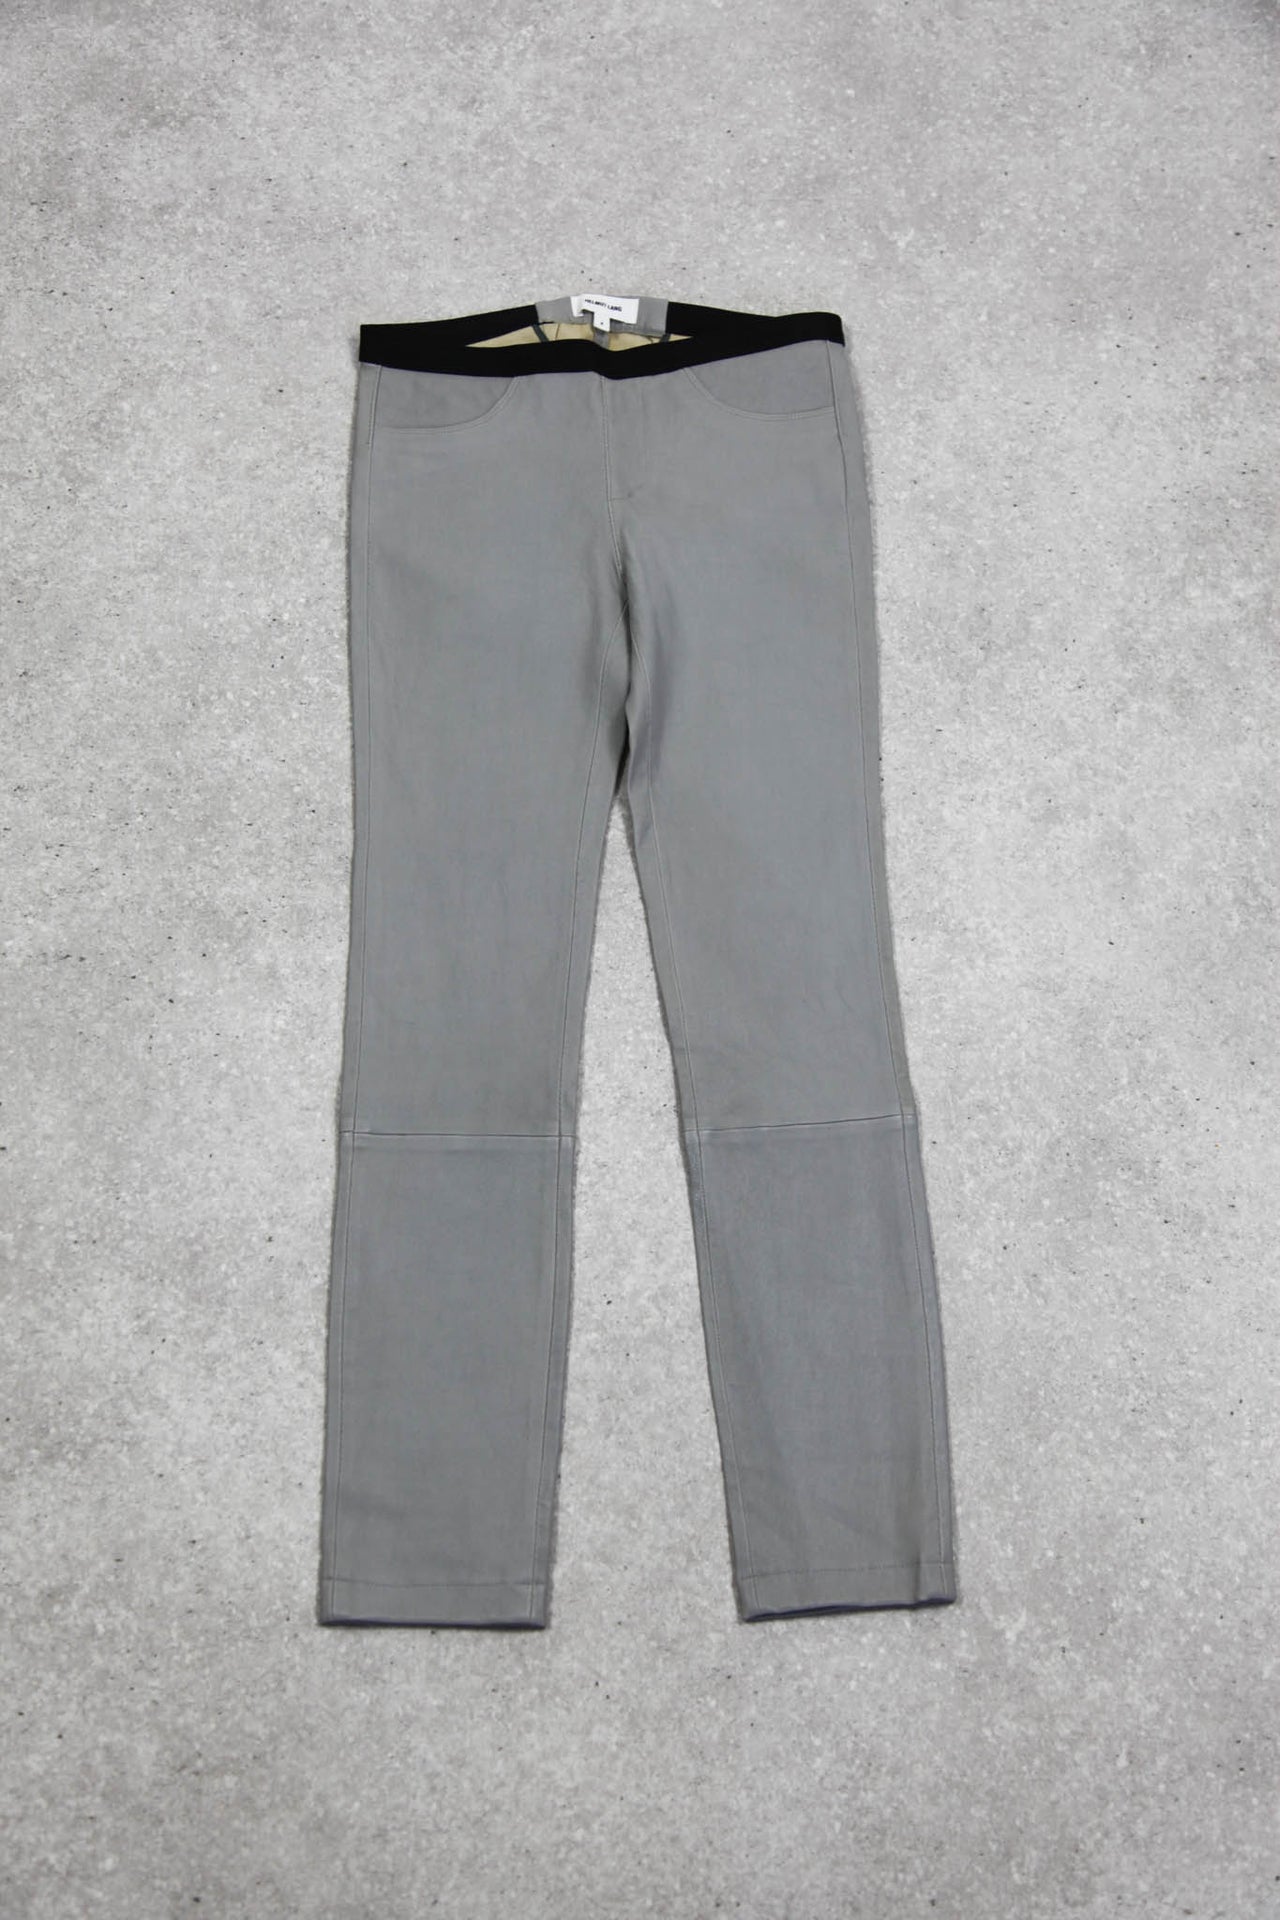 Helmut Lang Stone Grey Leather Pants (XS/S)